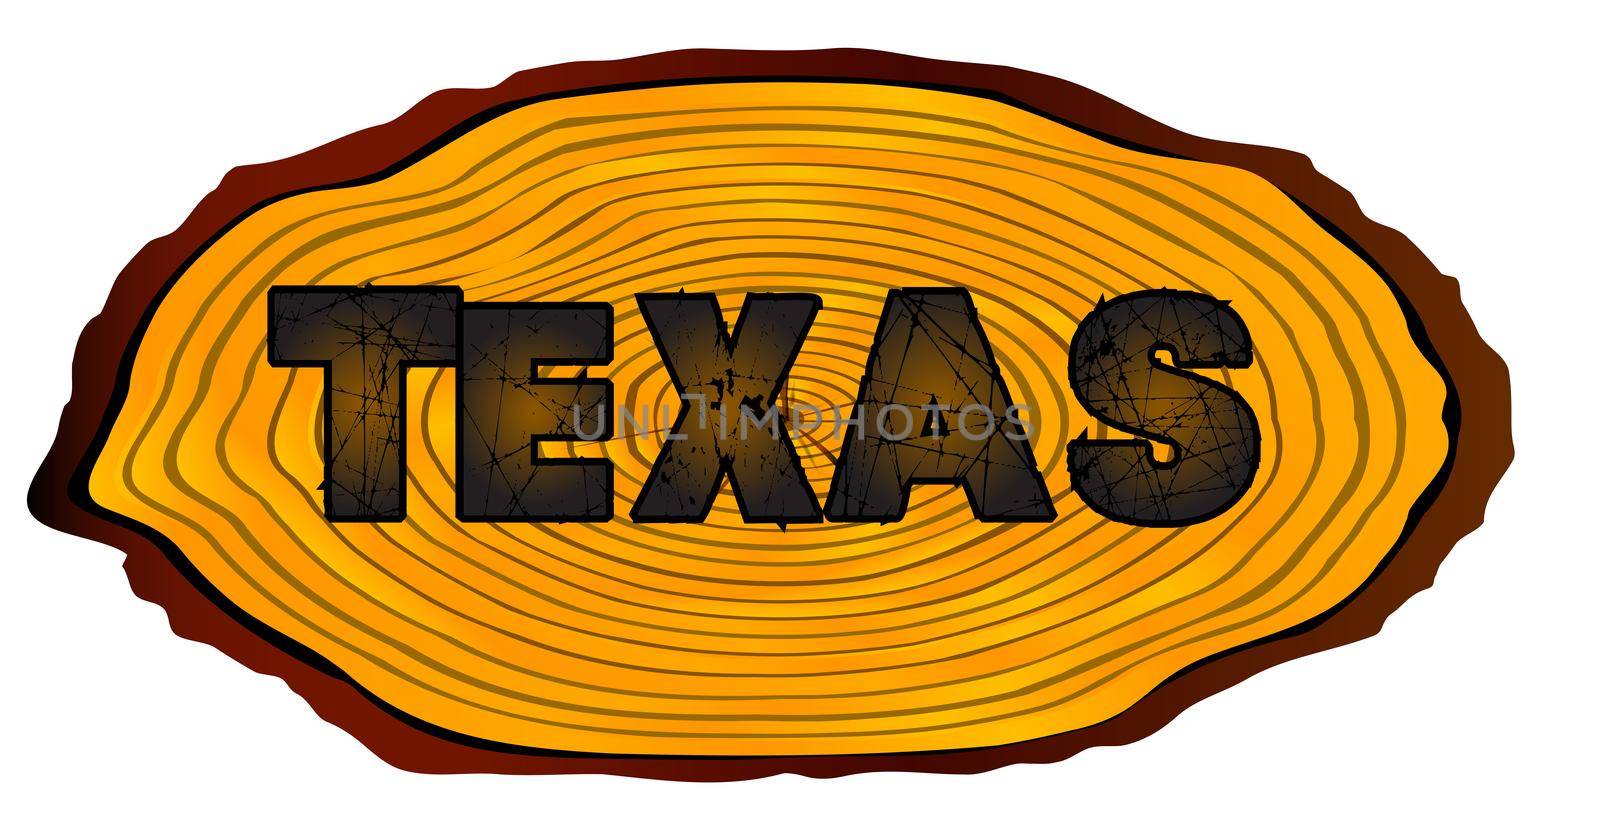 Texas Log Sign by Bigalbaloo